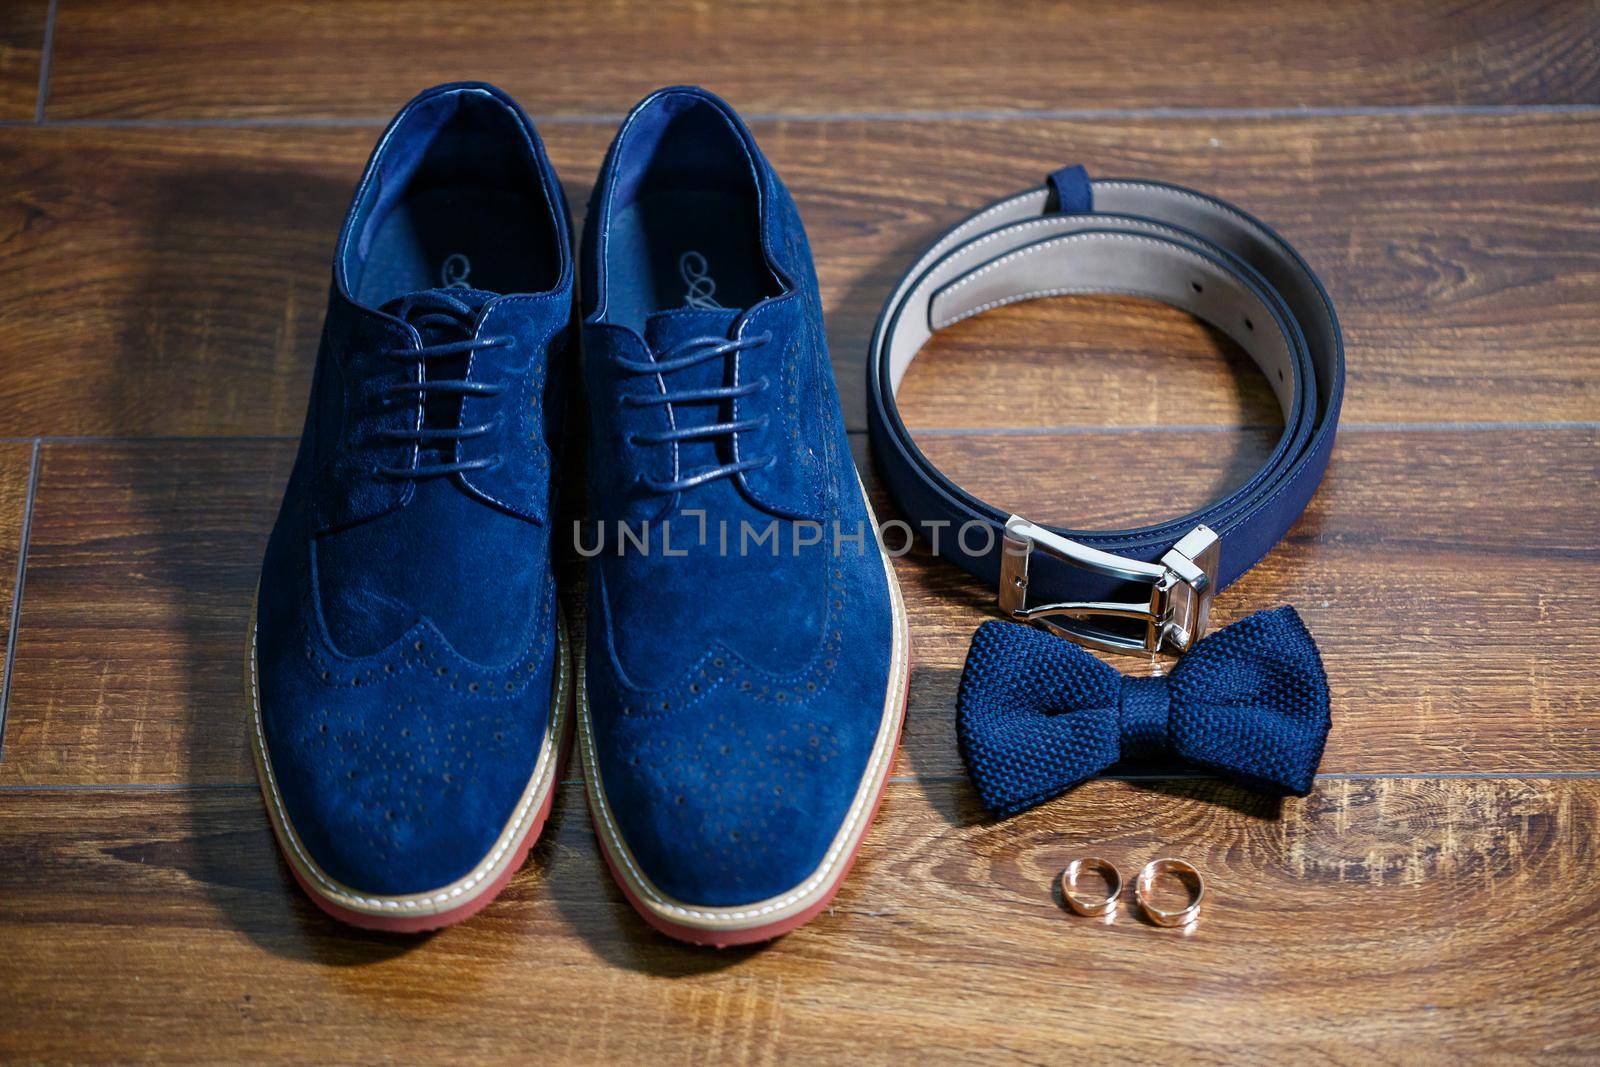 men's accessories on a wedding day by Dmitrytph